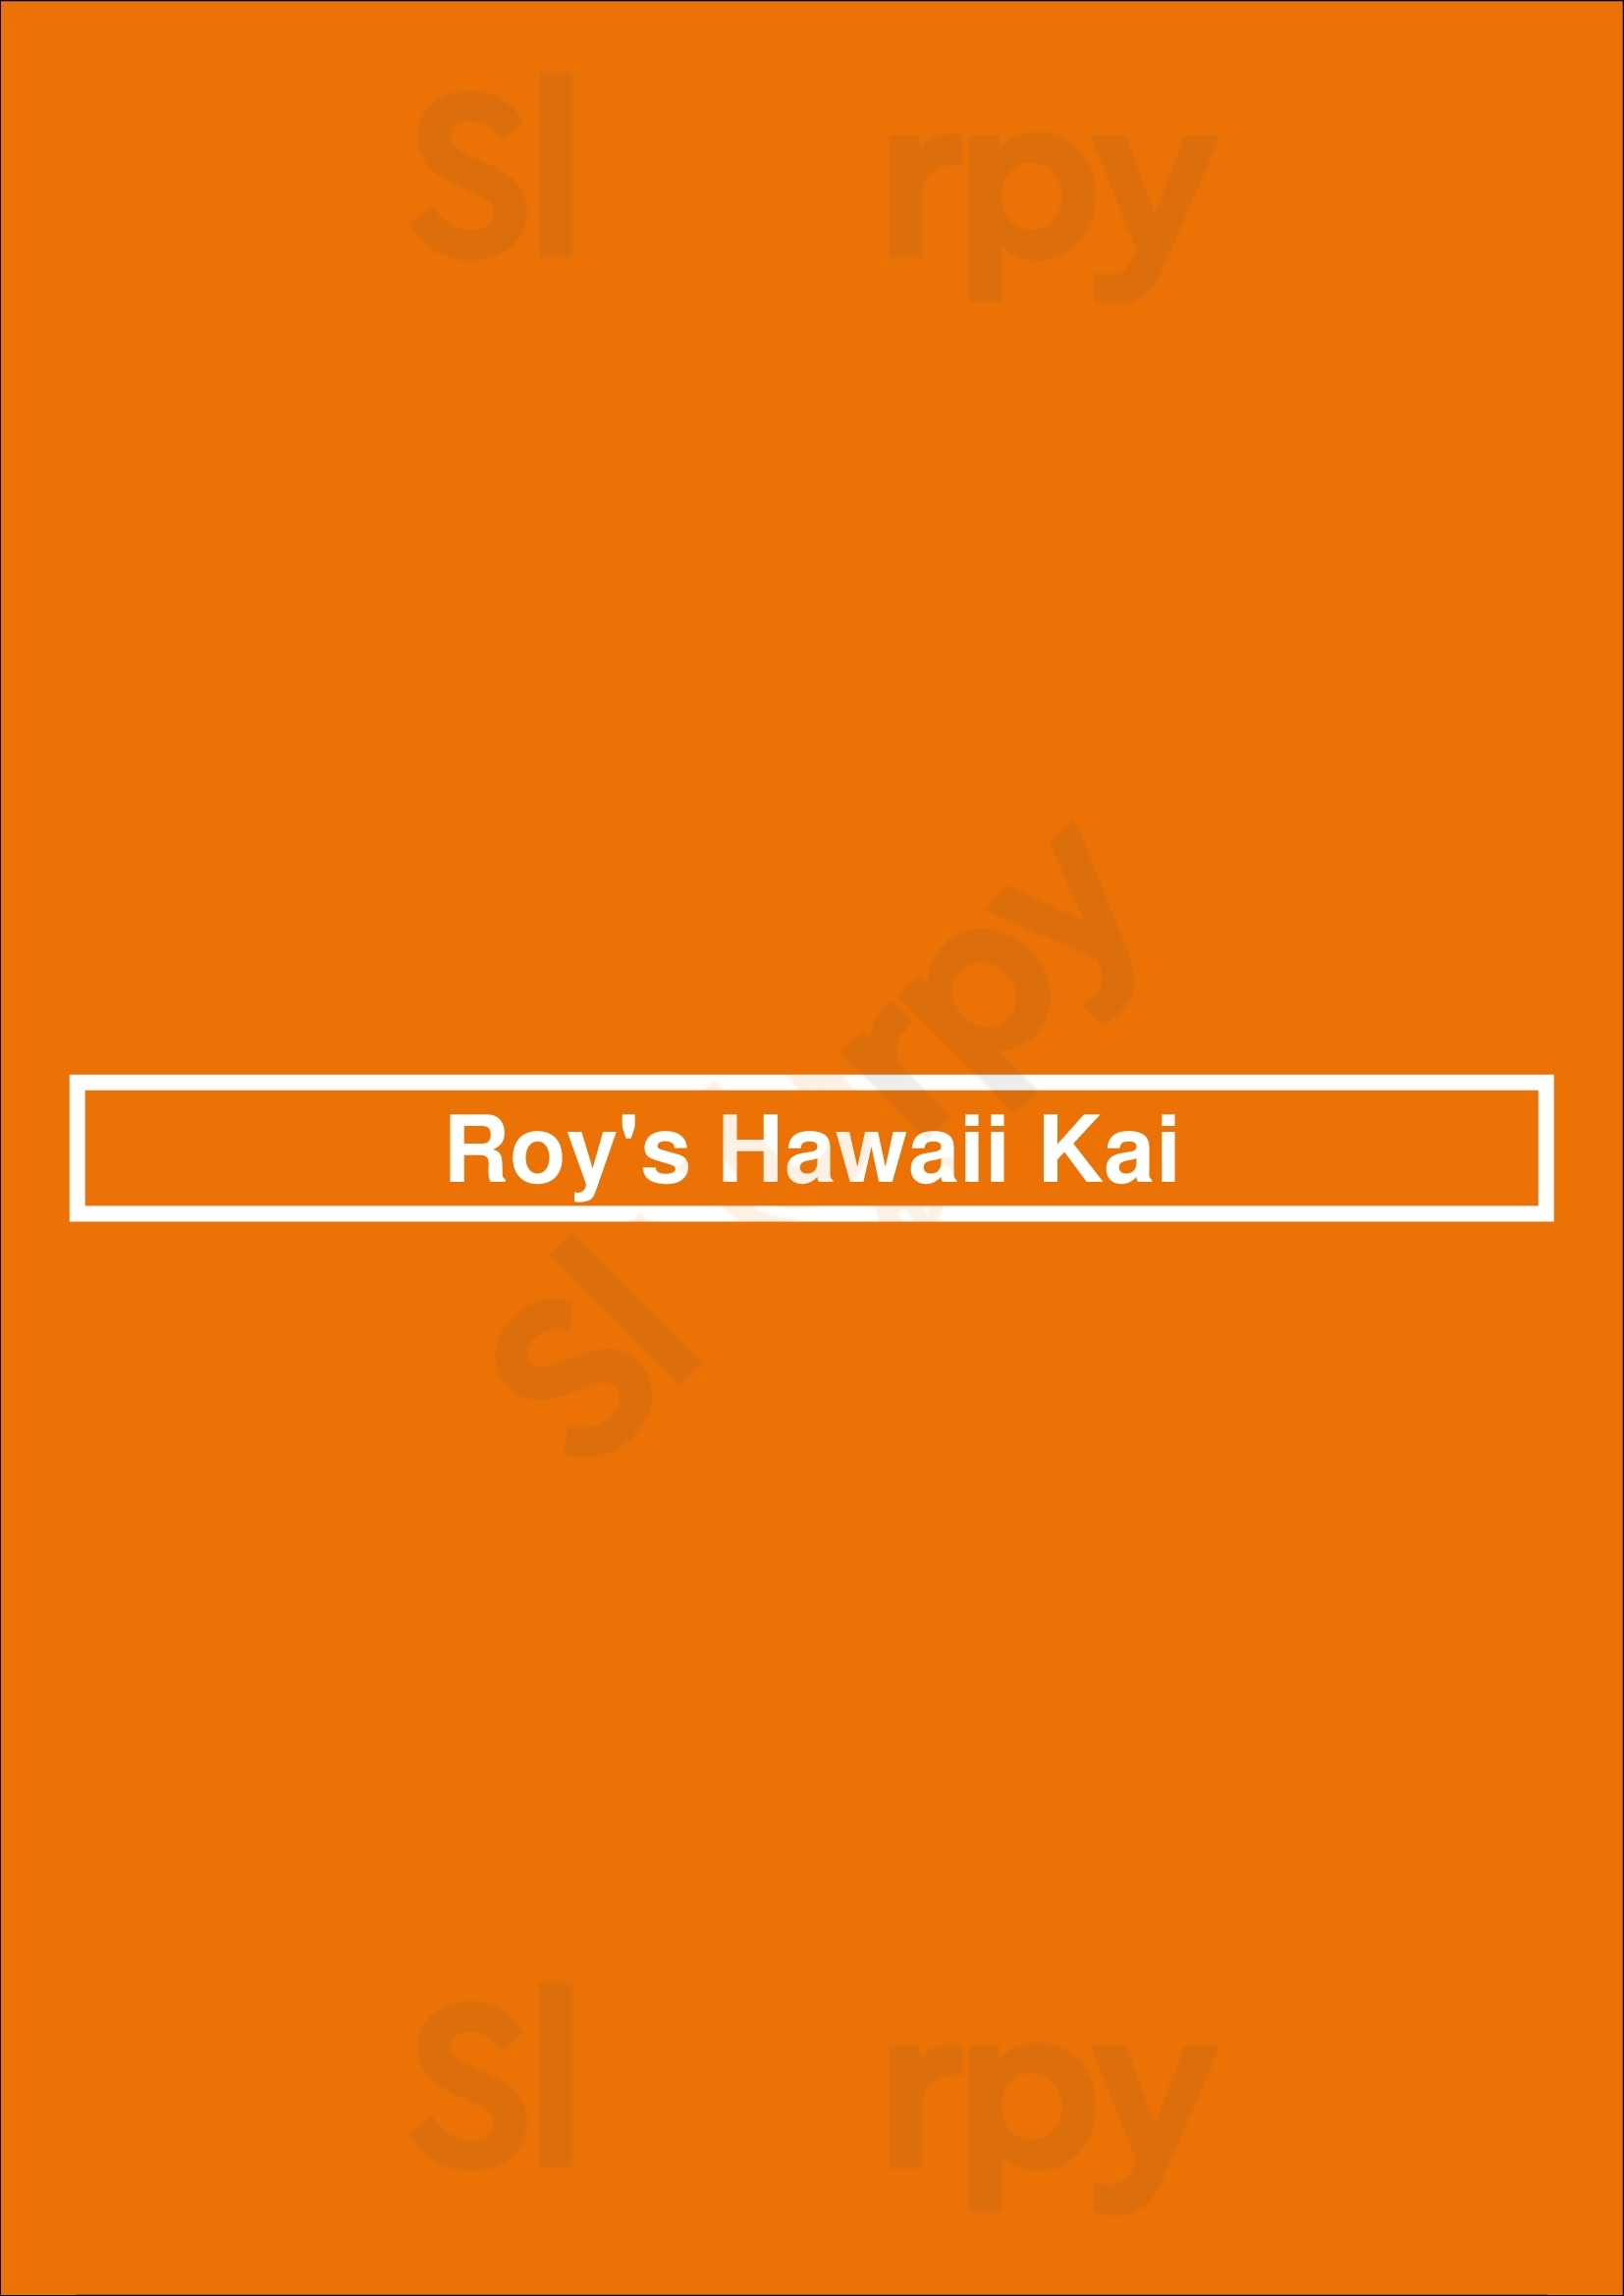 Roy's Hawaii Kai Honolulu Menu - 1